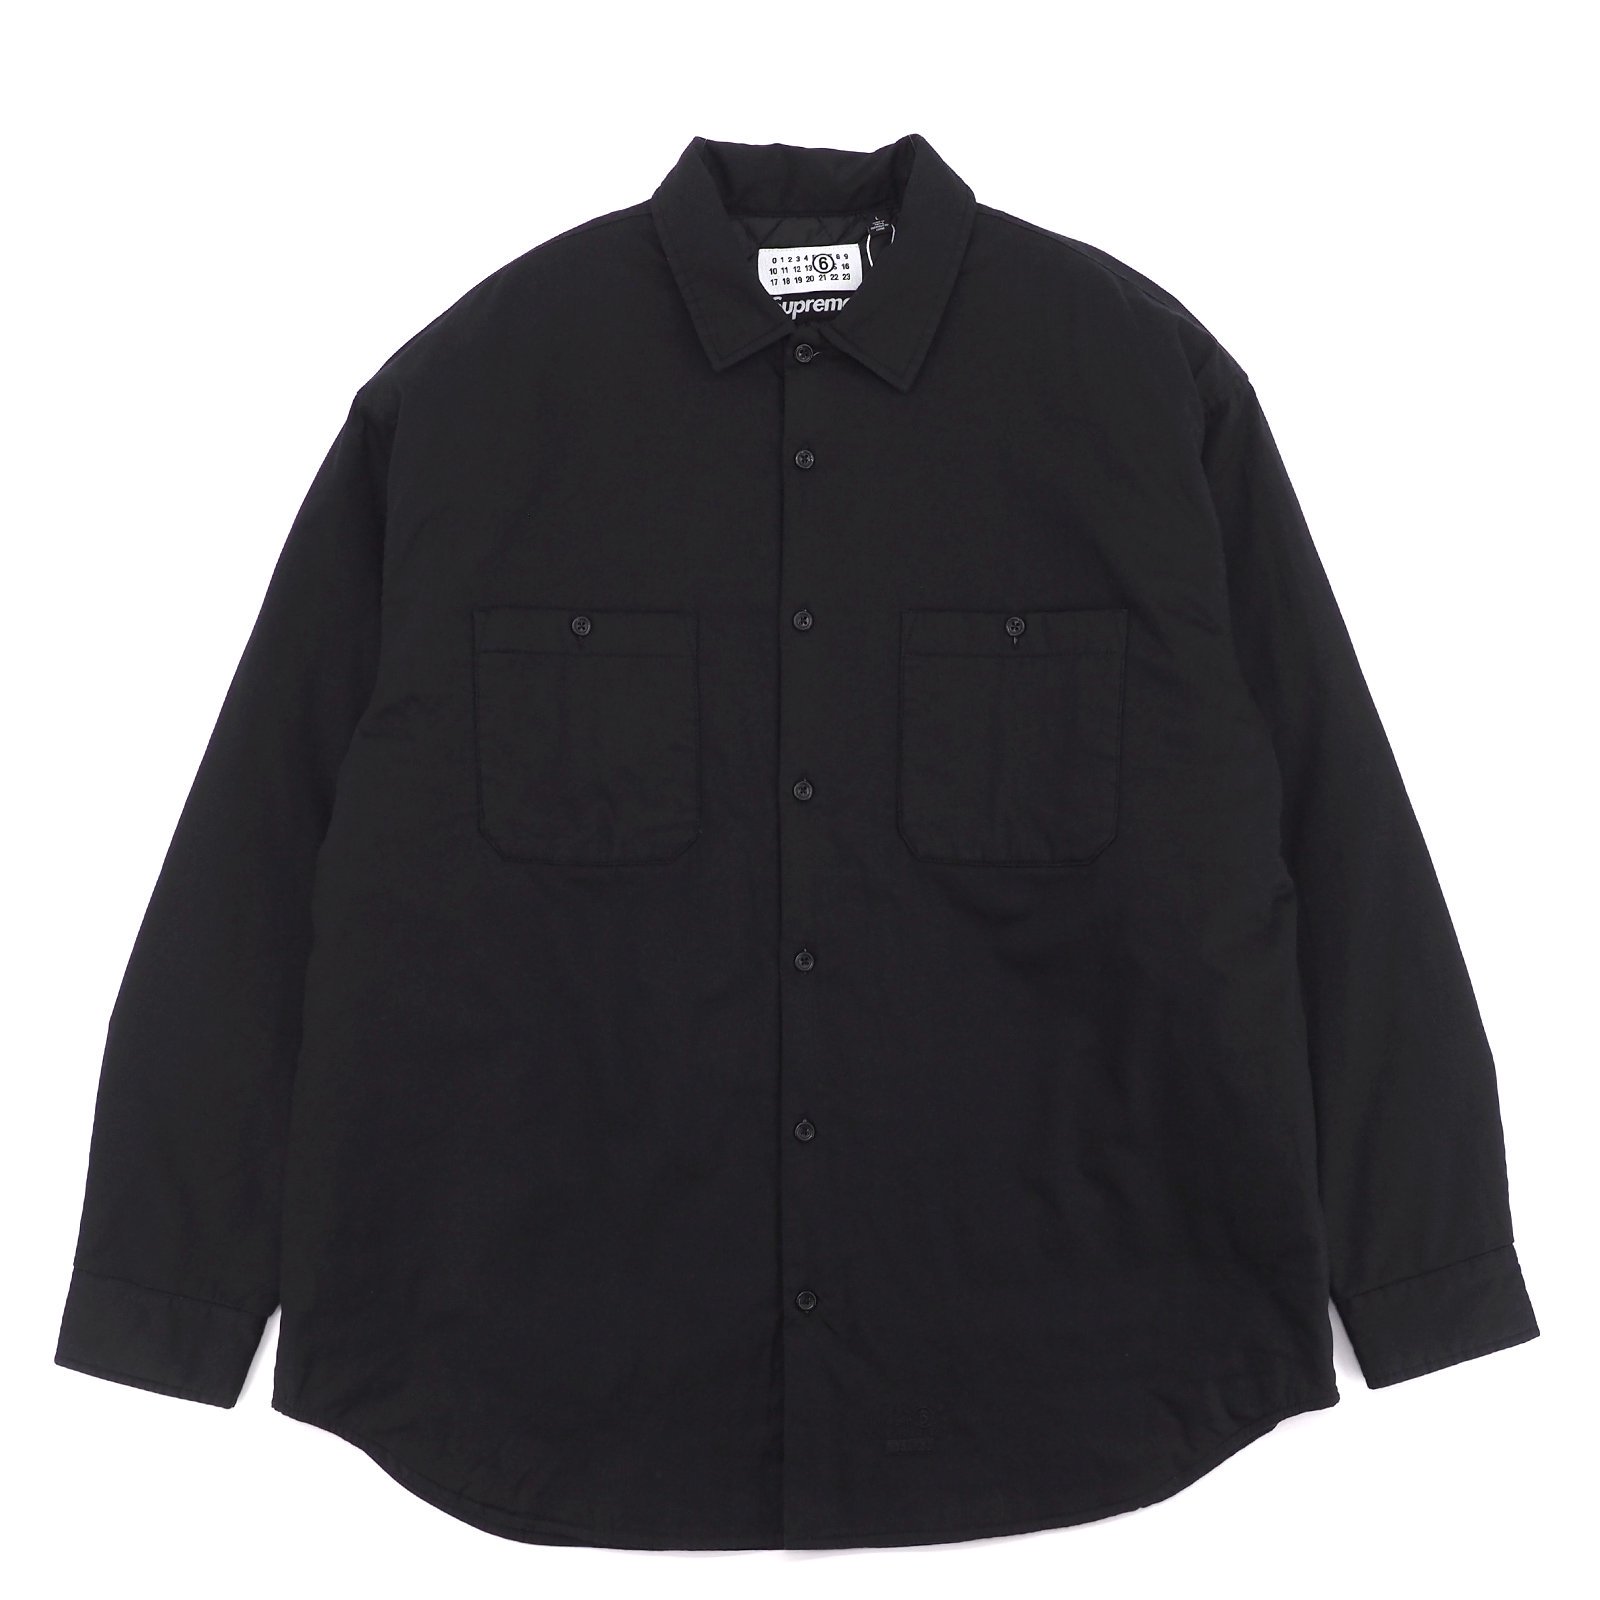 mm6supreme x MM6 padded shirt S size black